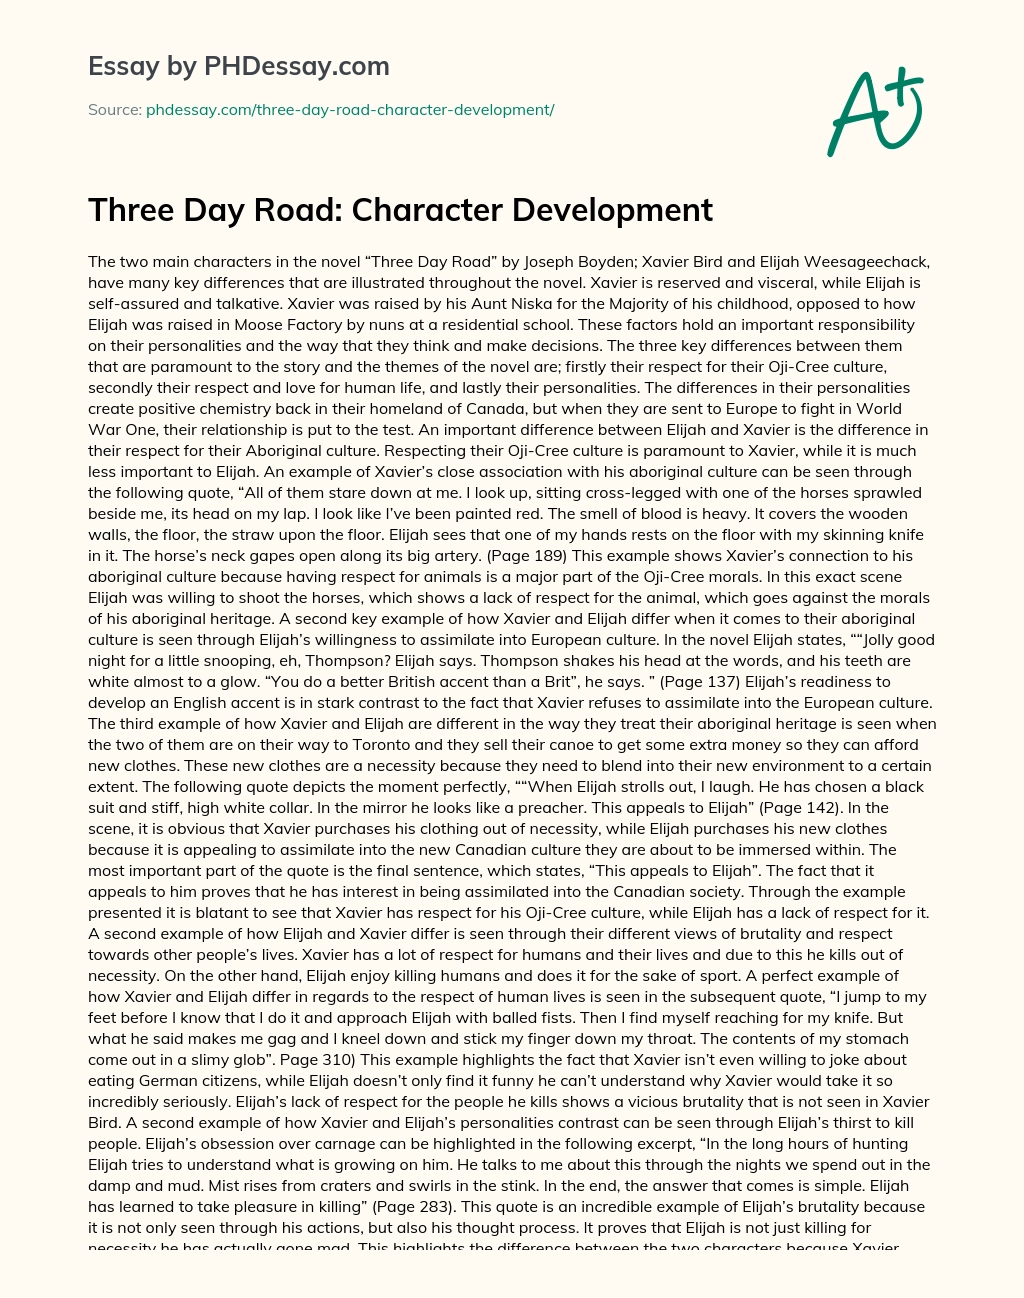 Three Day Road: Character Development essay